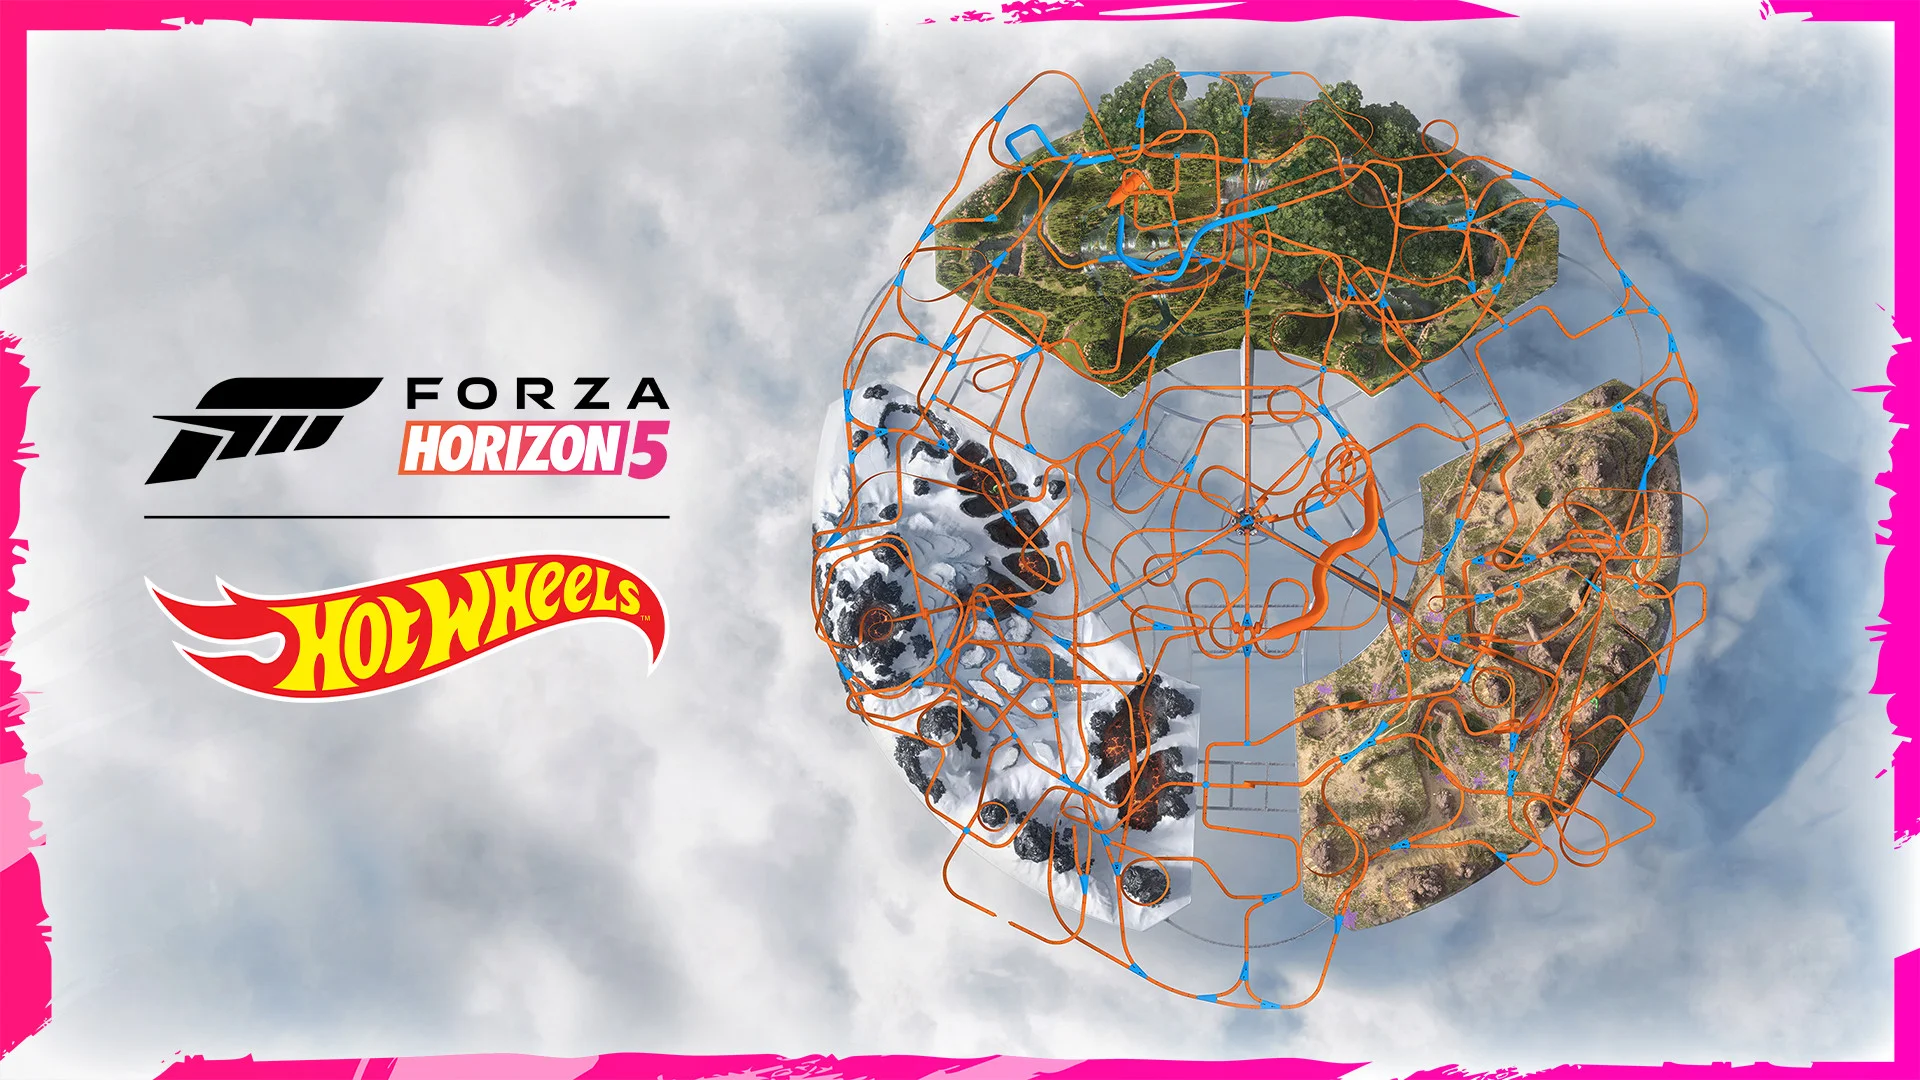 Создатели Forza Horizon 5 опубликовали карту дополнения Hot Wheels - фото 1